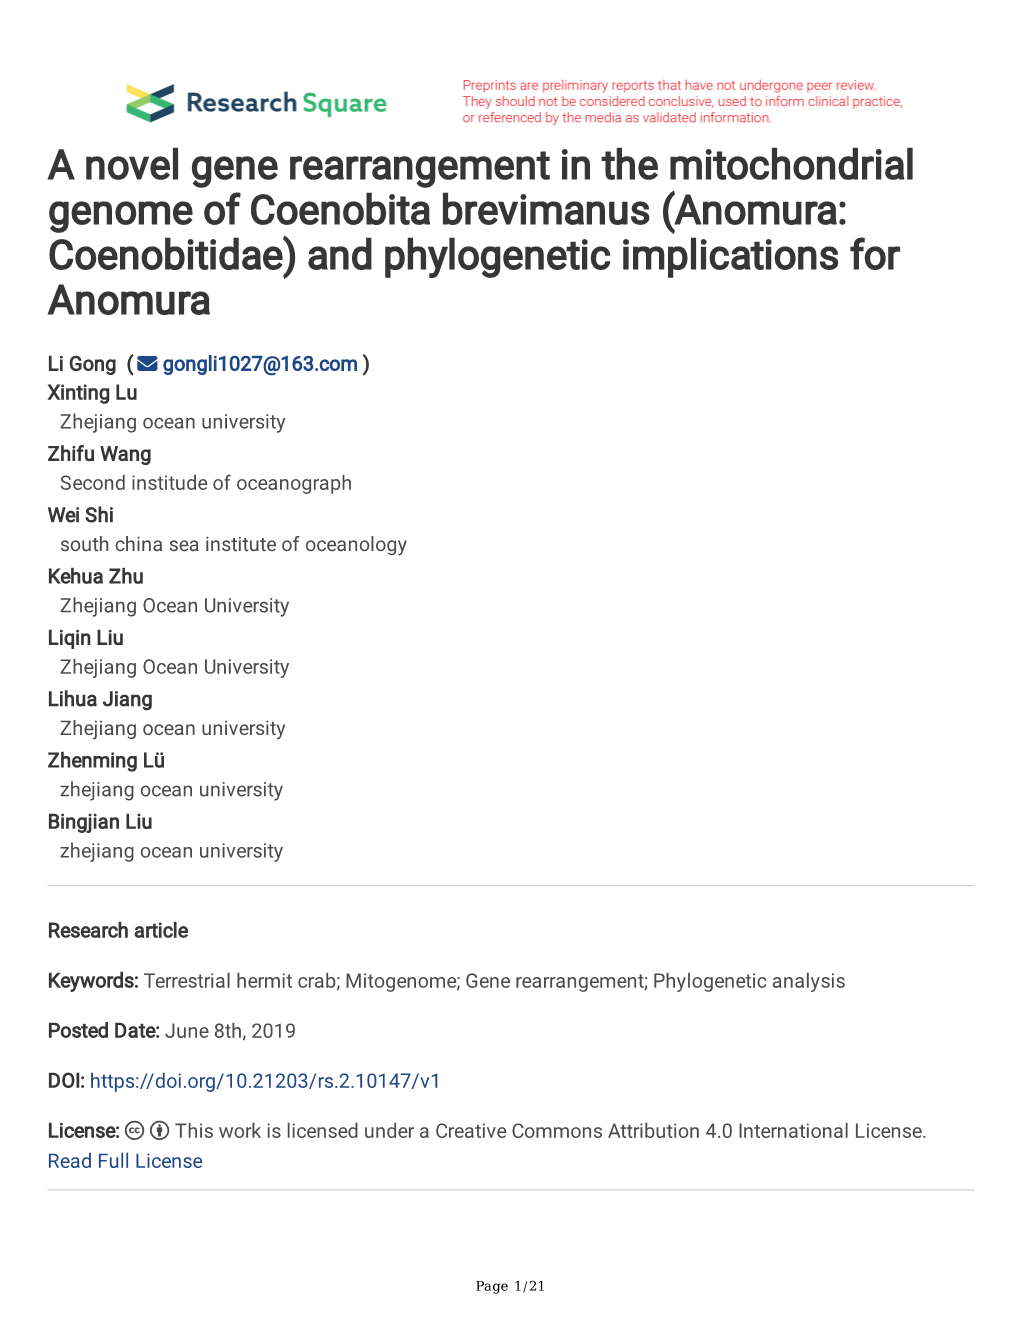 A Novel Gene Rearrangement in the Mitochondrial Genome of Coenobita Brevimanus (Anomura: Coenobitidae) and Phylogenetic Implications for Anomura